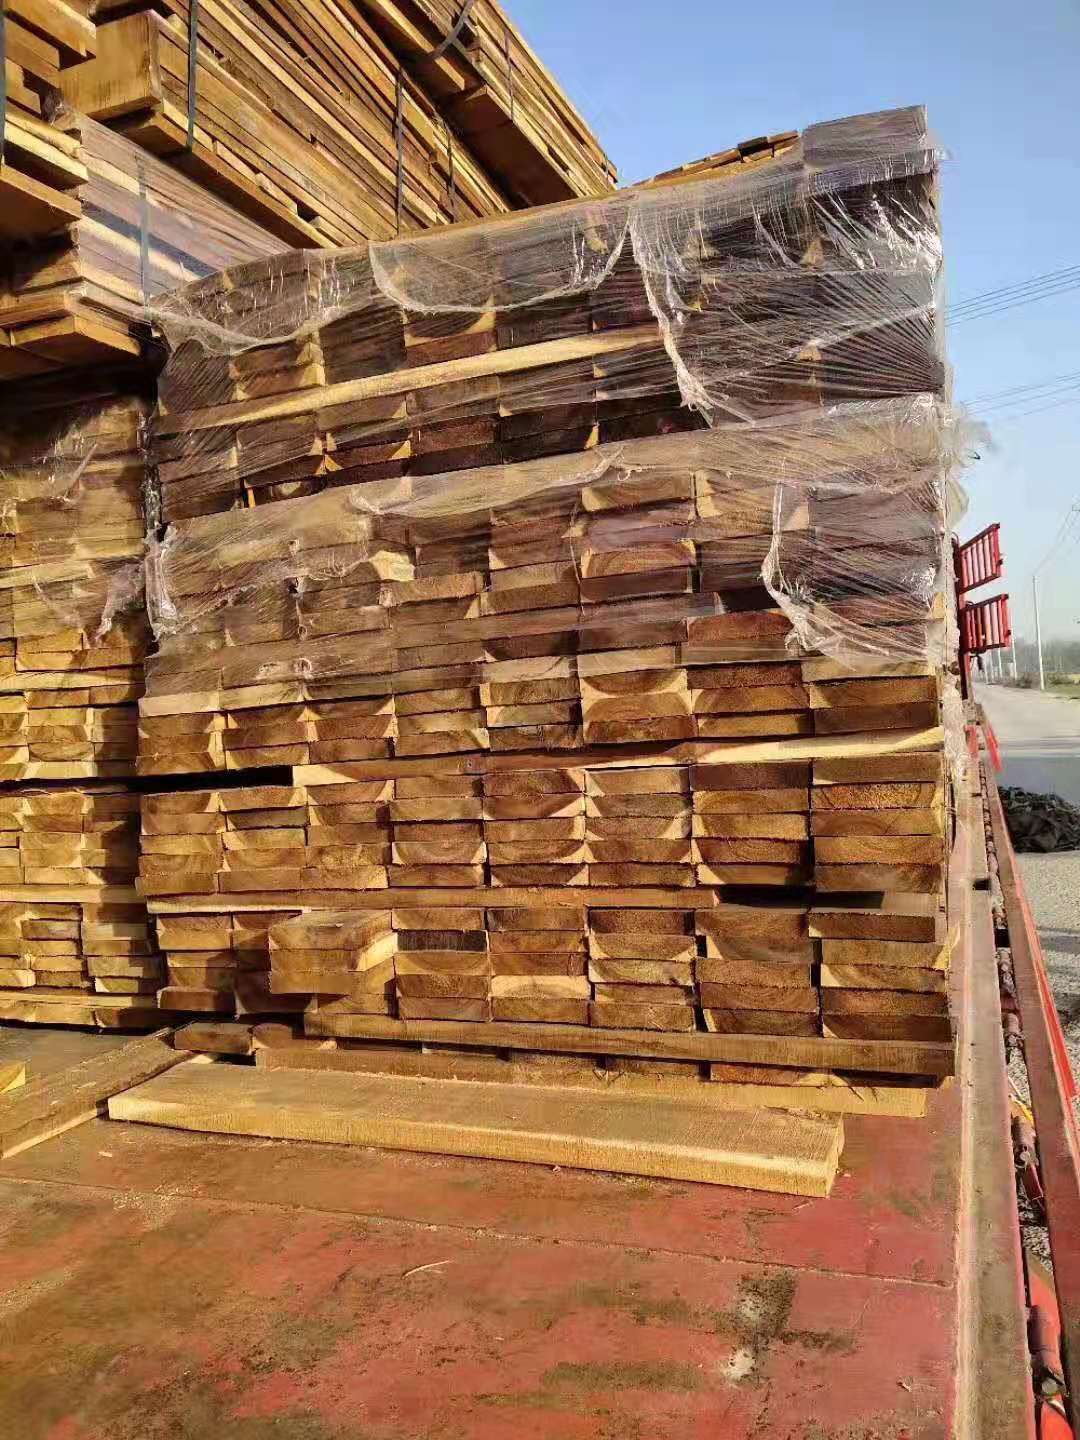 wood raw material